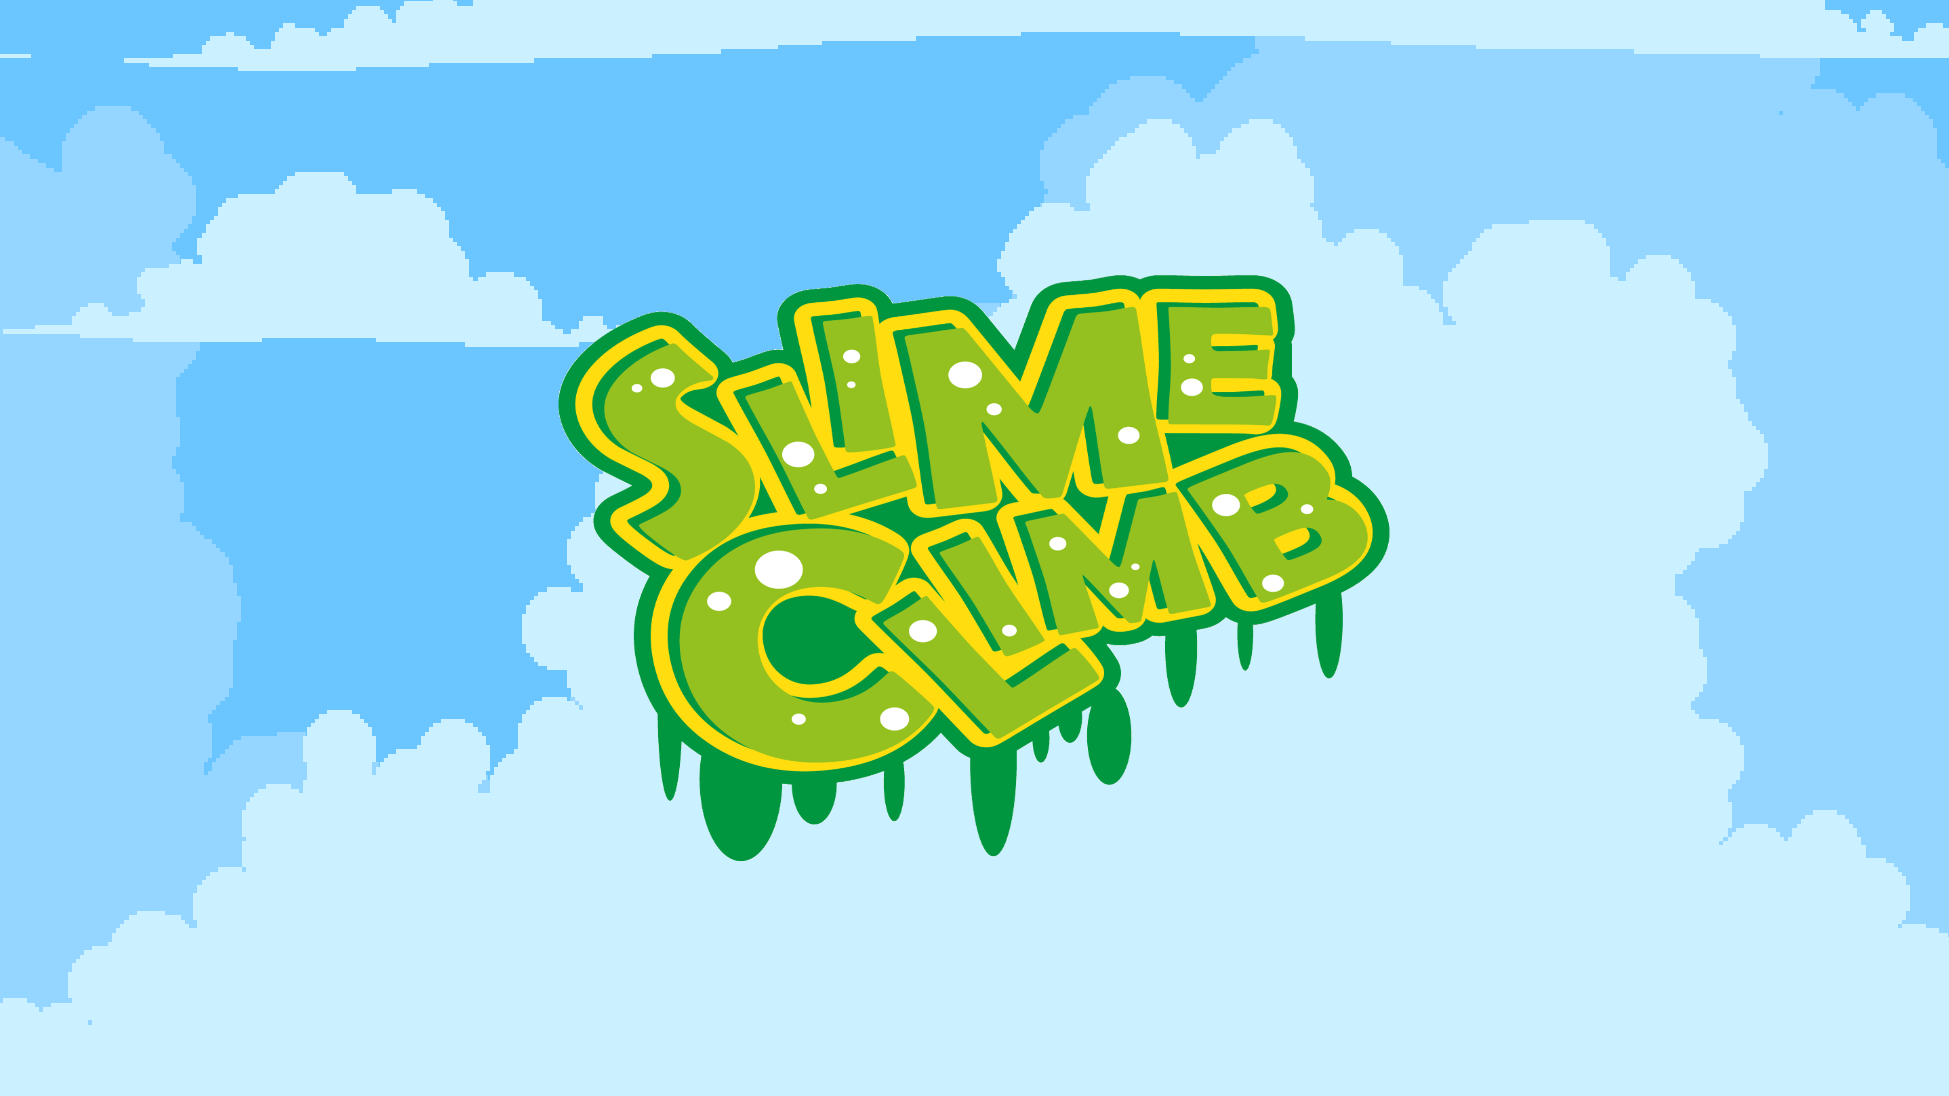 Slime Climb